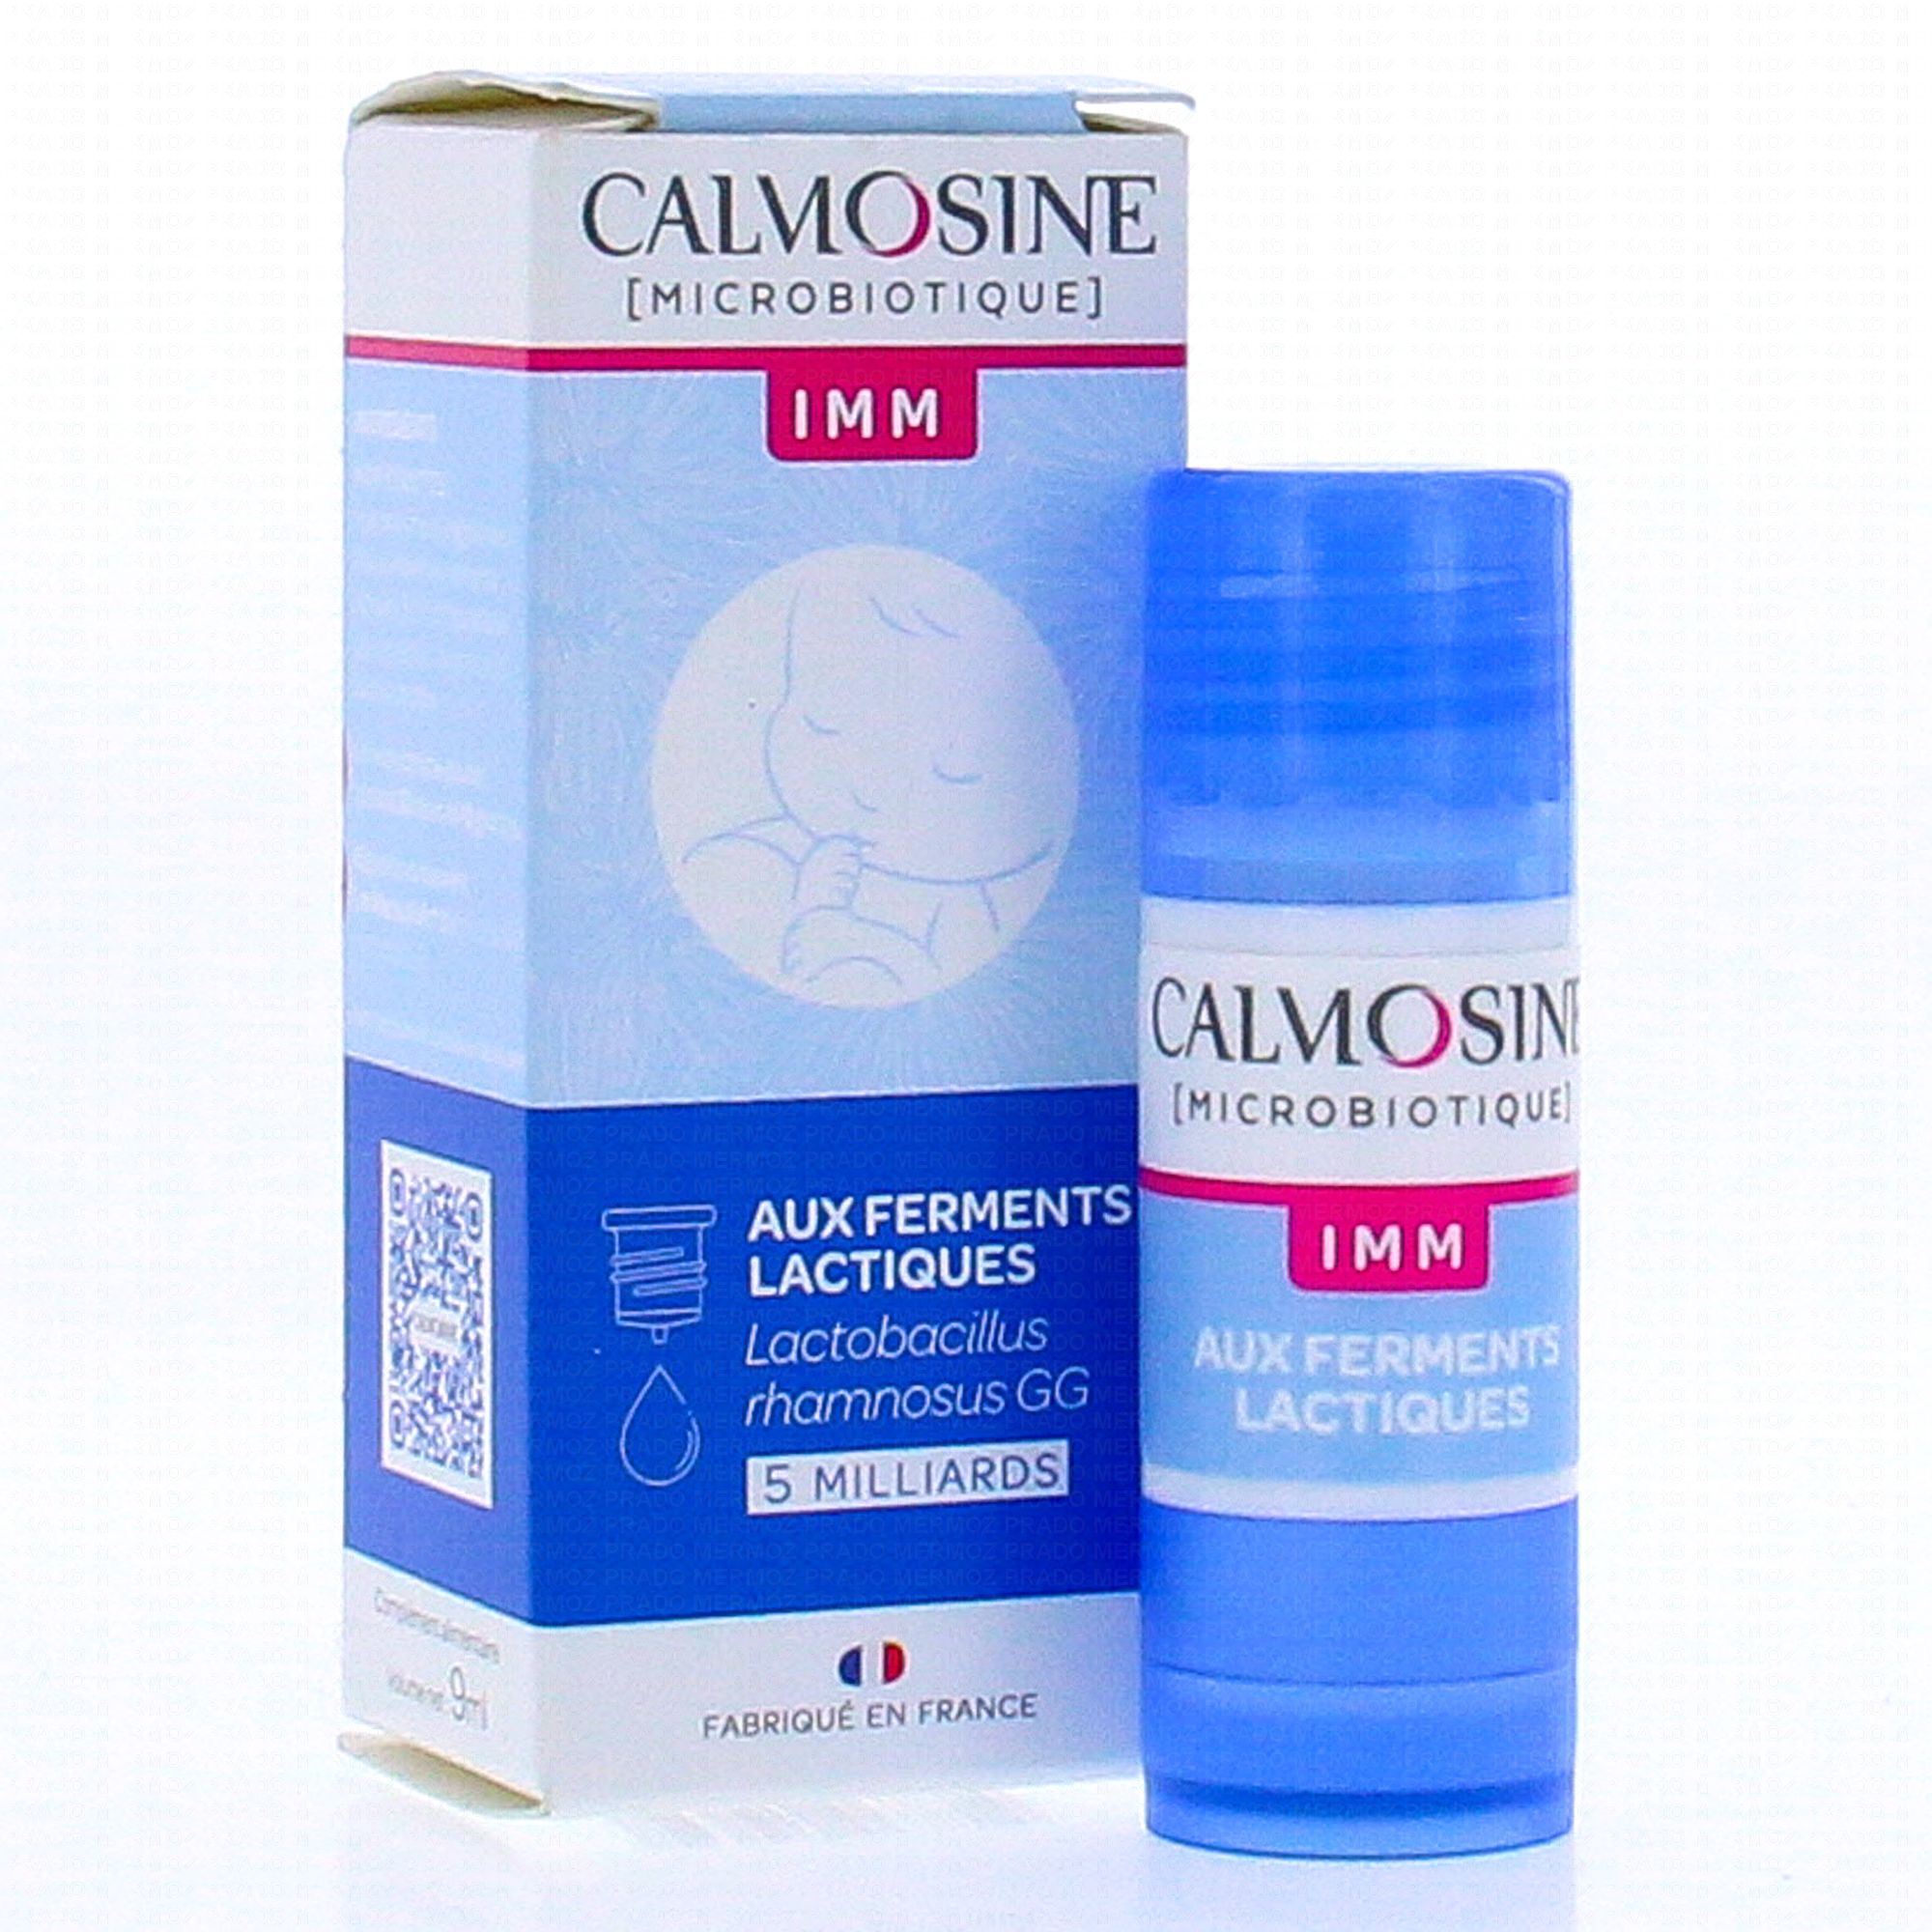 Calmosine Microbiotique IMM 9ml - Easypara